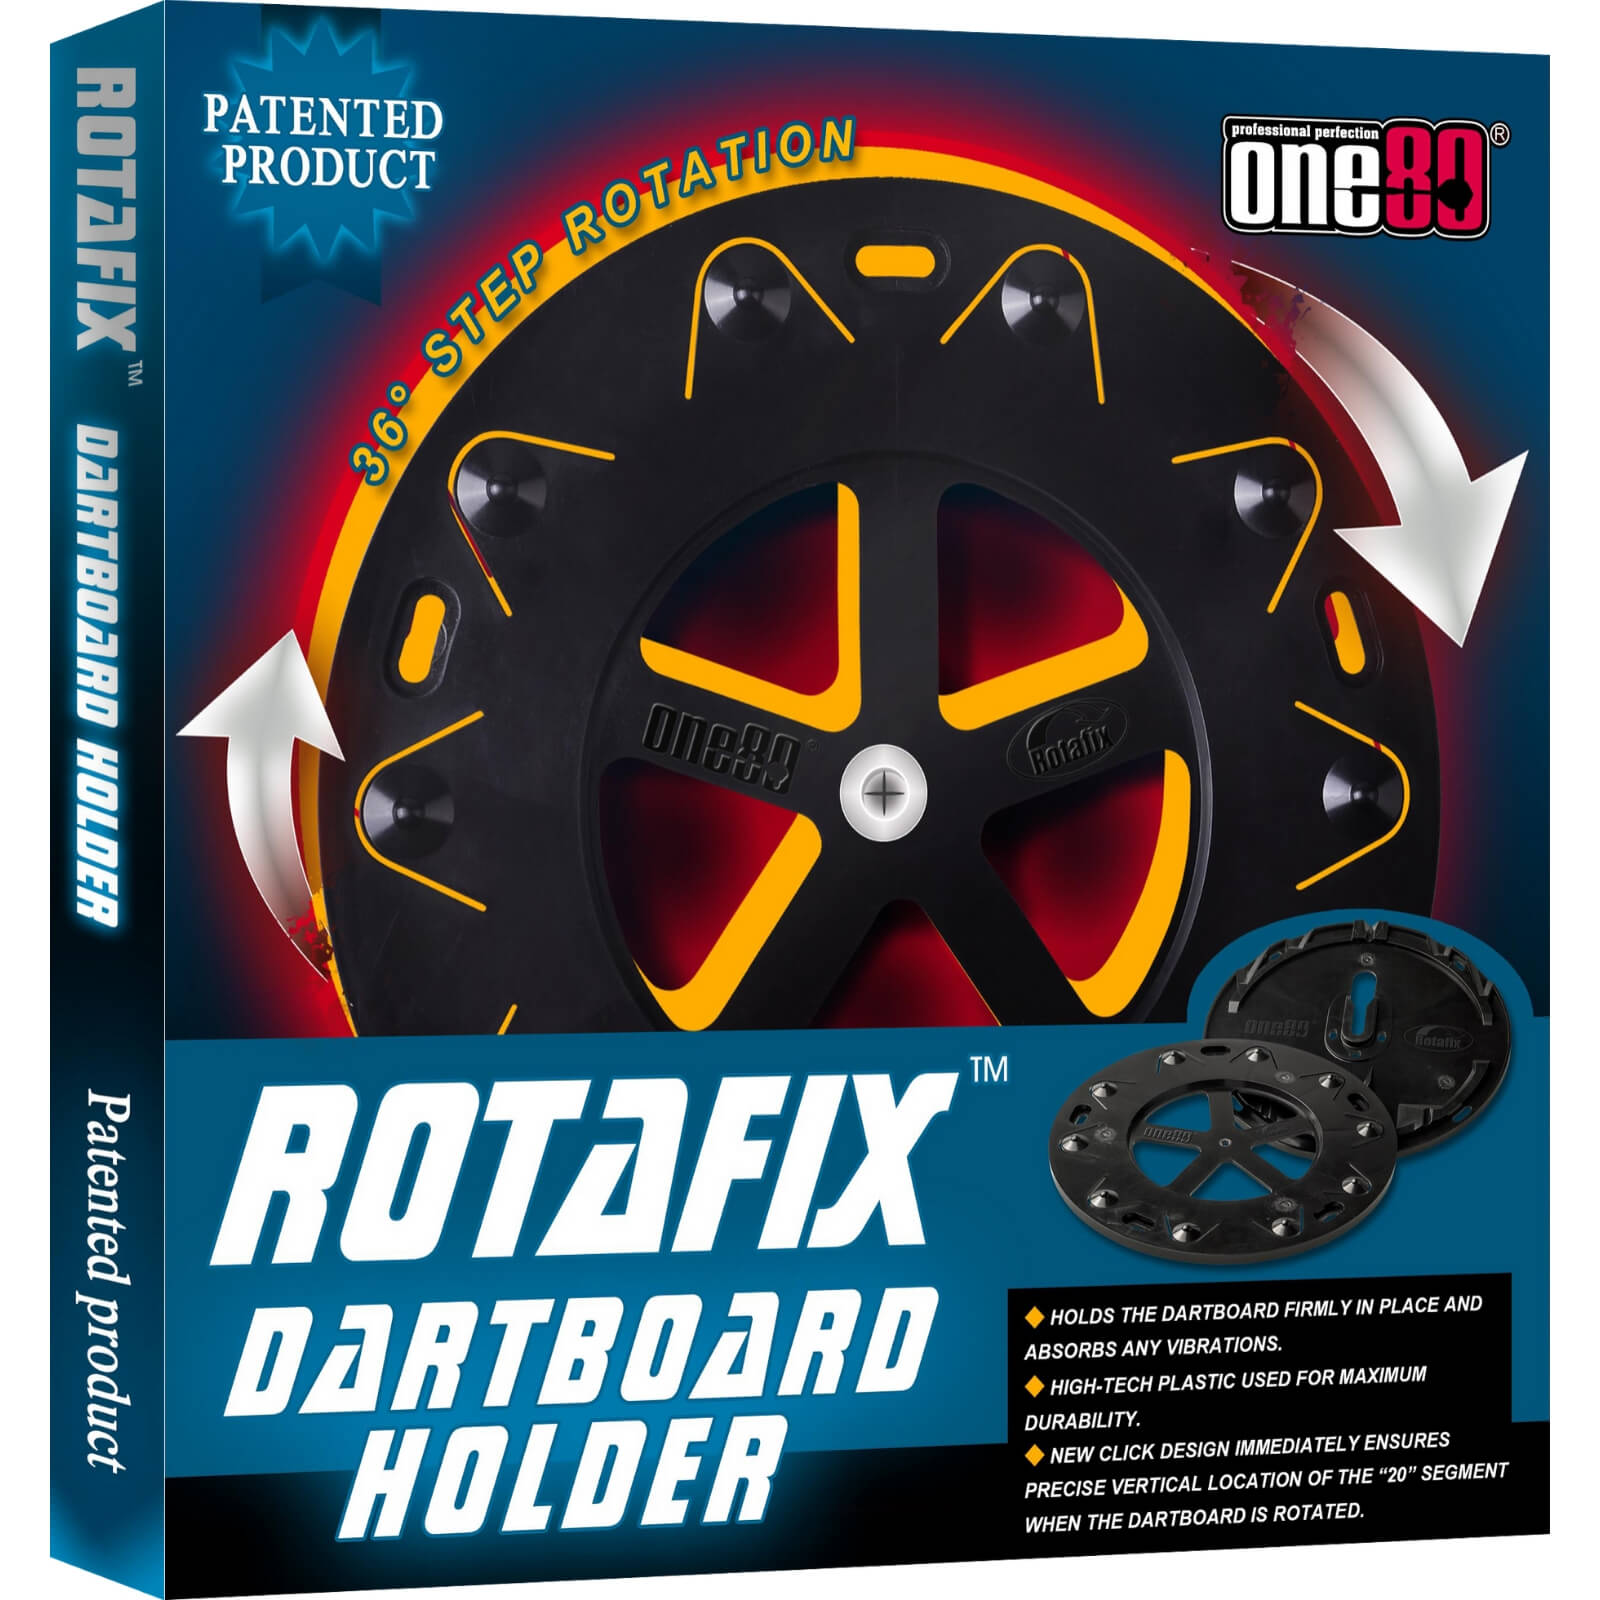 Dartboard Accessories - One80 - Rotafix Dartboard Holder 